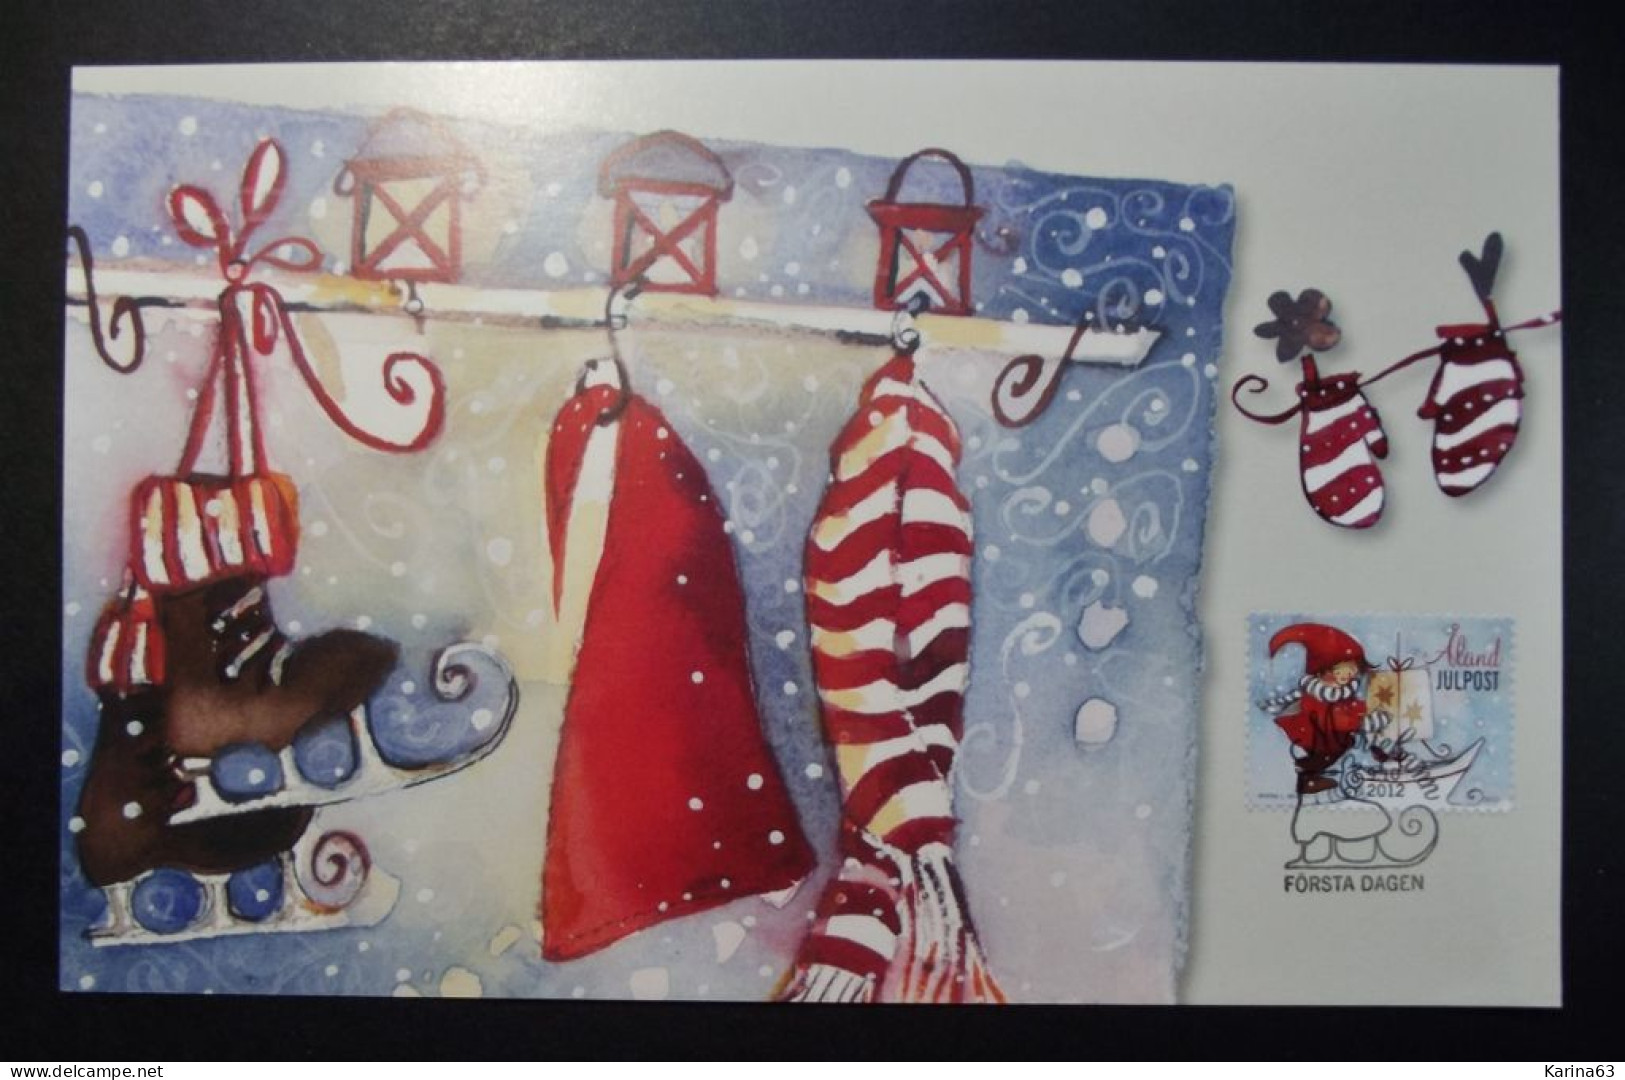 Aland - 2012 -  Christmas Maximum Card -  Greetings  - Goblin  - Port Payé - Aland